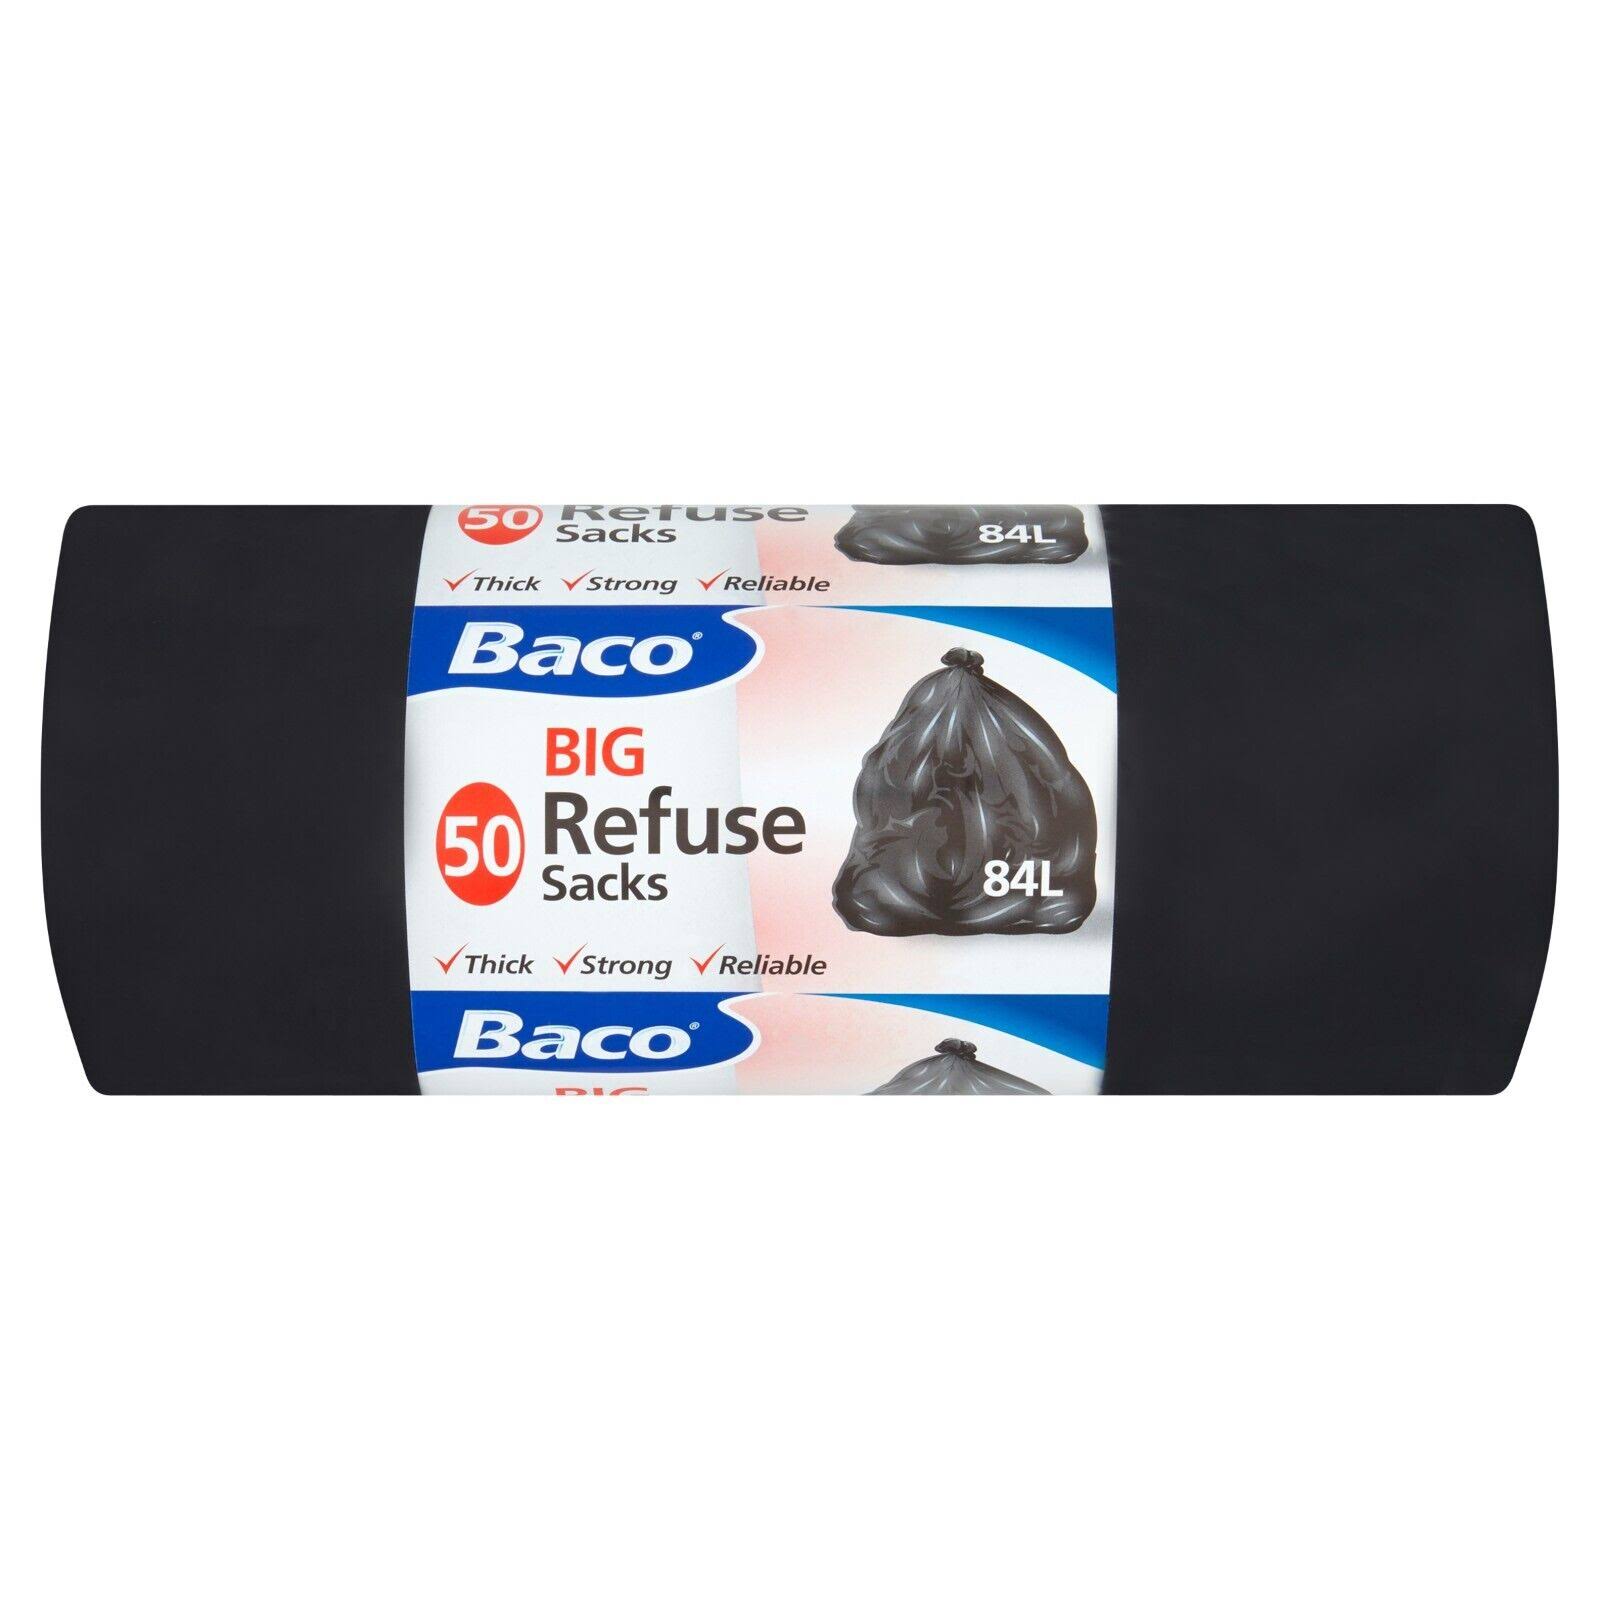 Baco Big Refuse Sacks - 84L, 50pcs